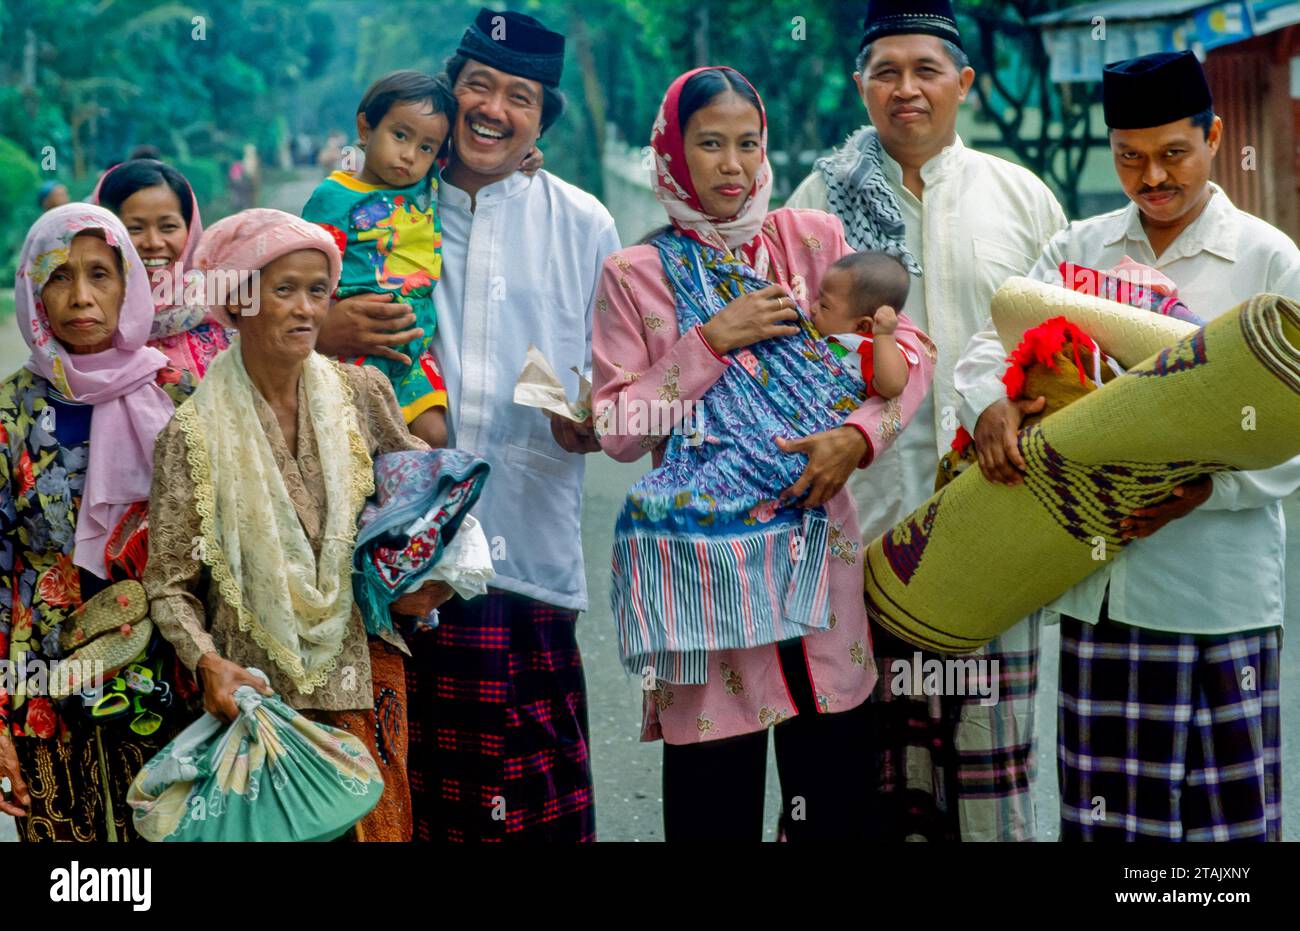 Indonesia, Yogyakarta. Family on their way to celebrate Idul Fitri (Eid) at the end of Ramadan. Stock Photo